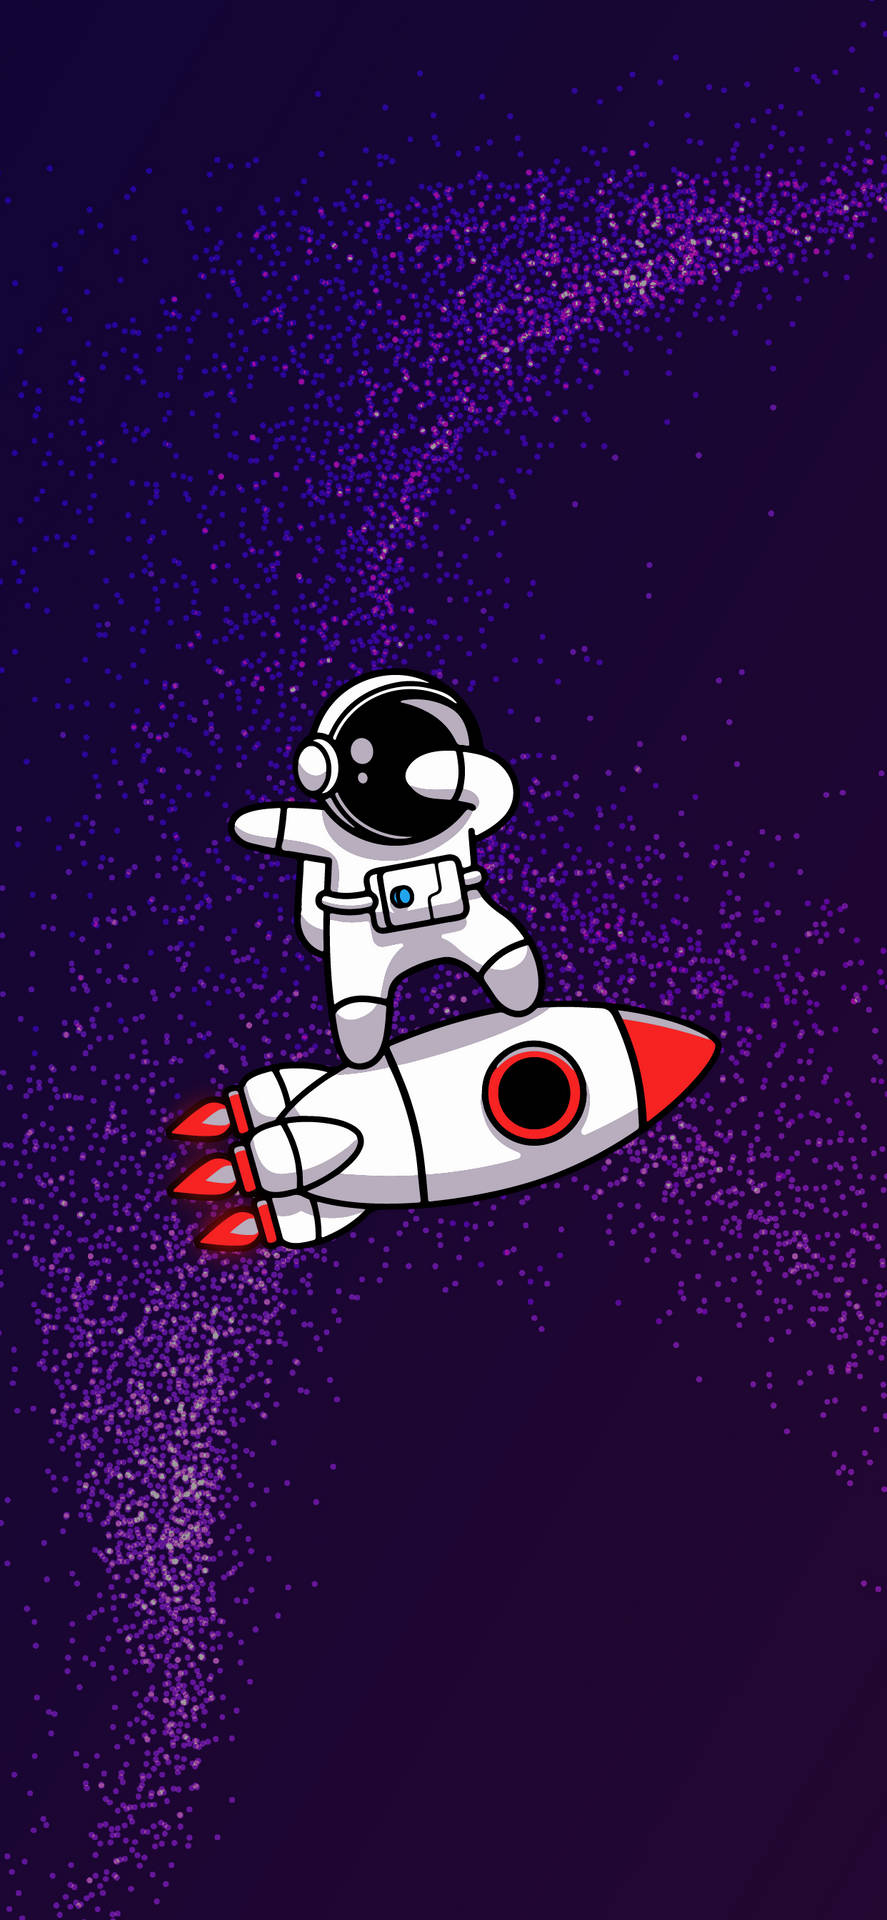 Cartoon Astronaut Riding A Rocket Ship Background